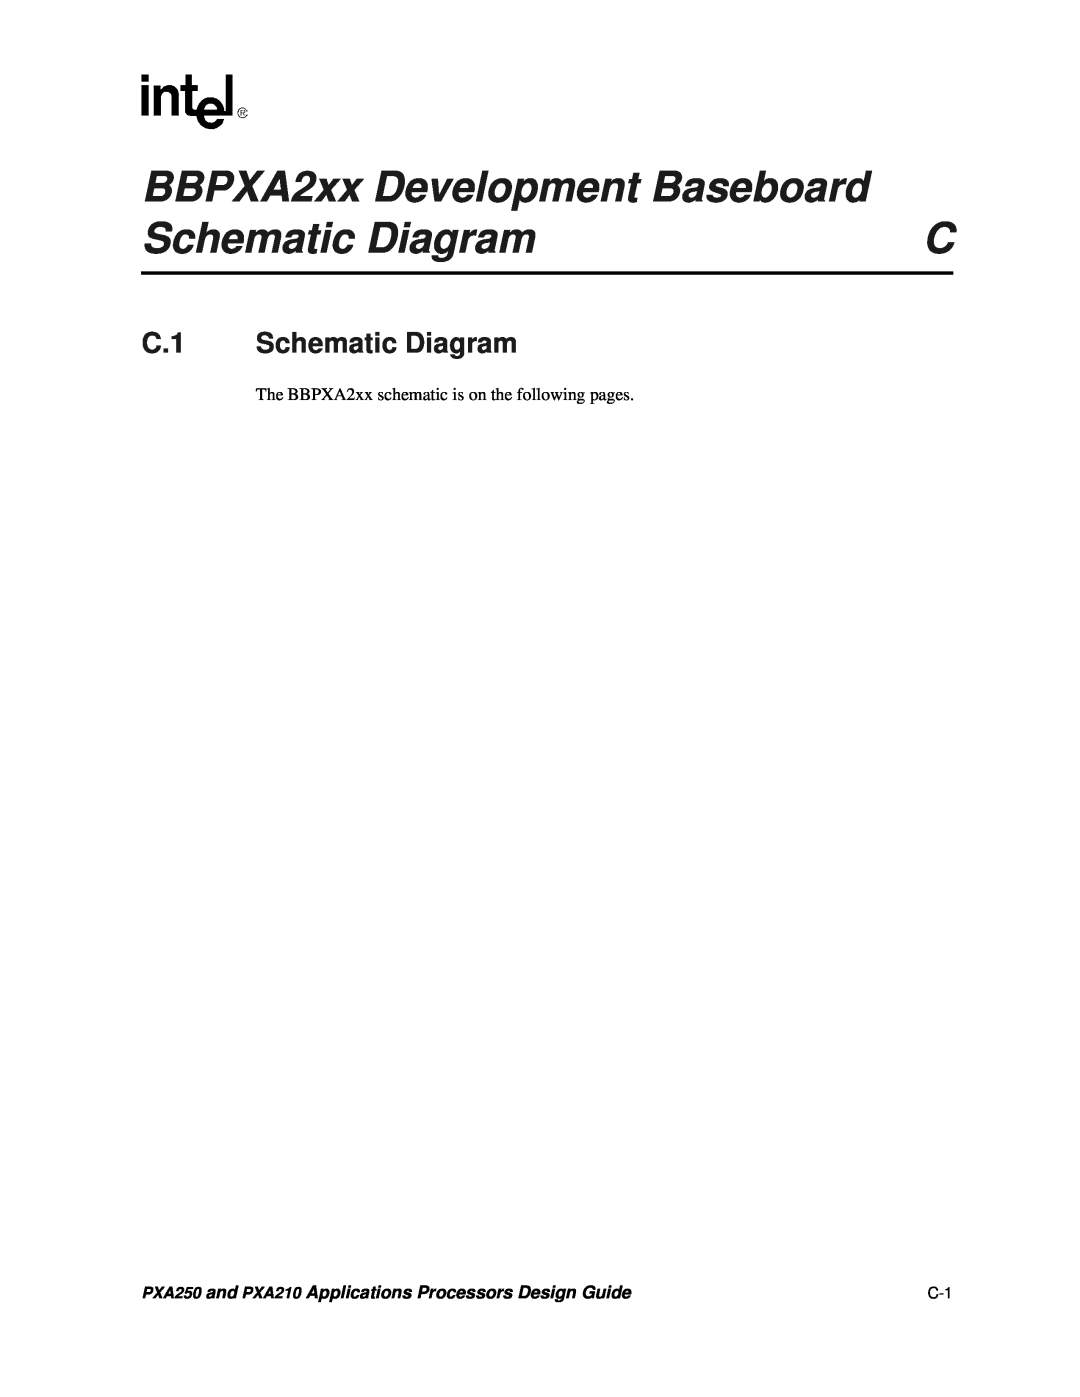 Intel PXA250 and PXA210 manual BBPXA2xx Development Baseboard, C.1 Schematic Diagram 